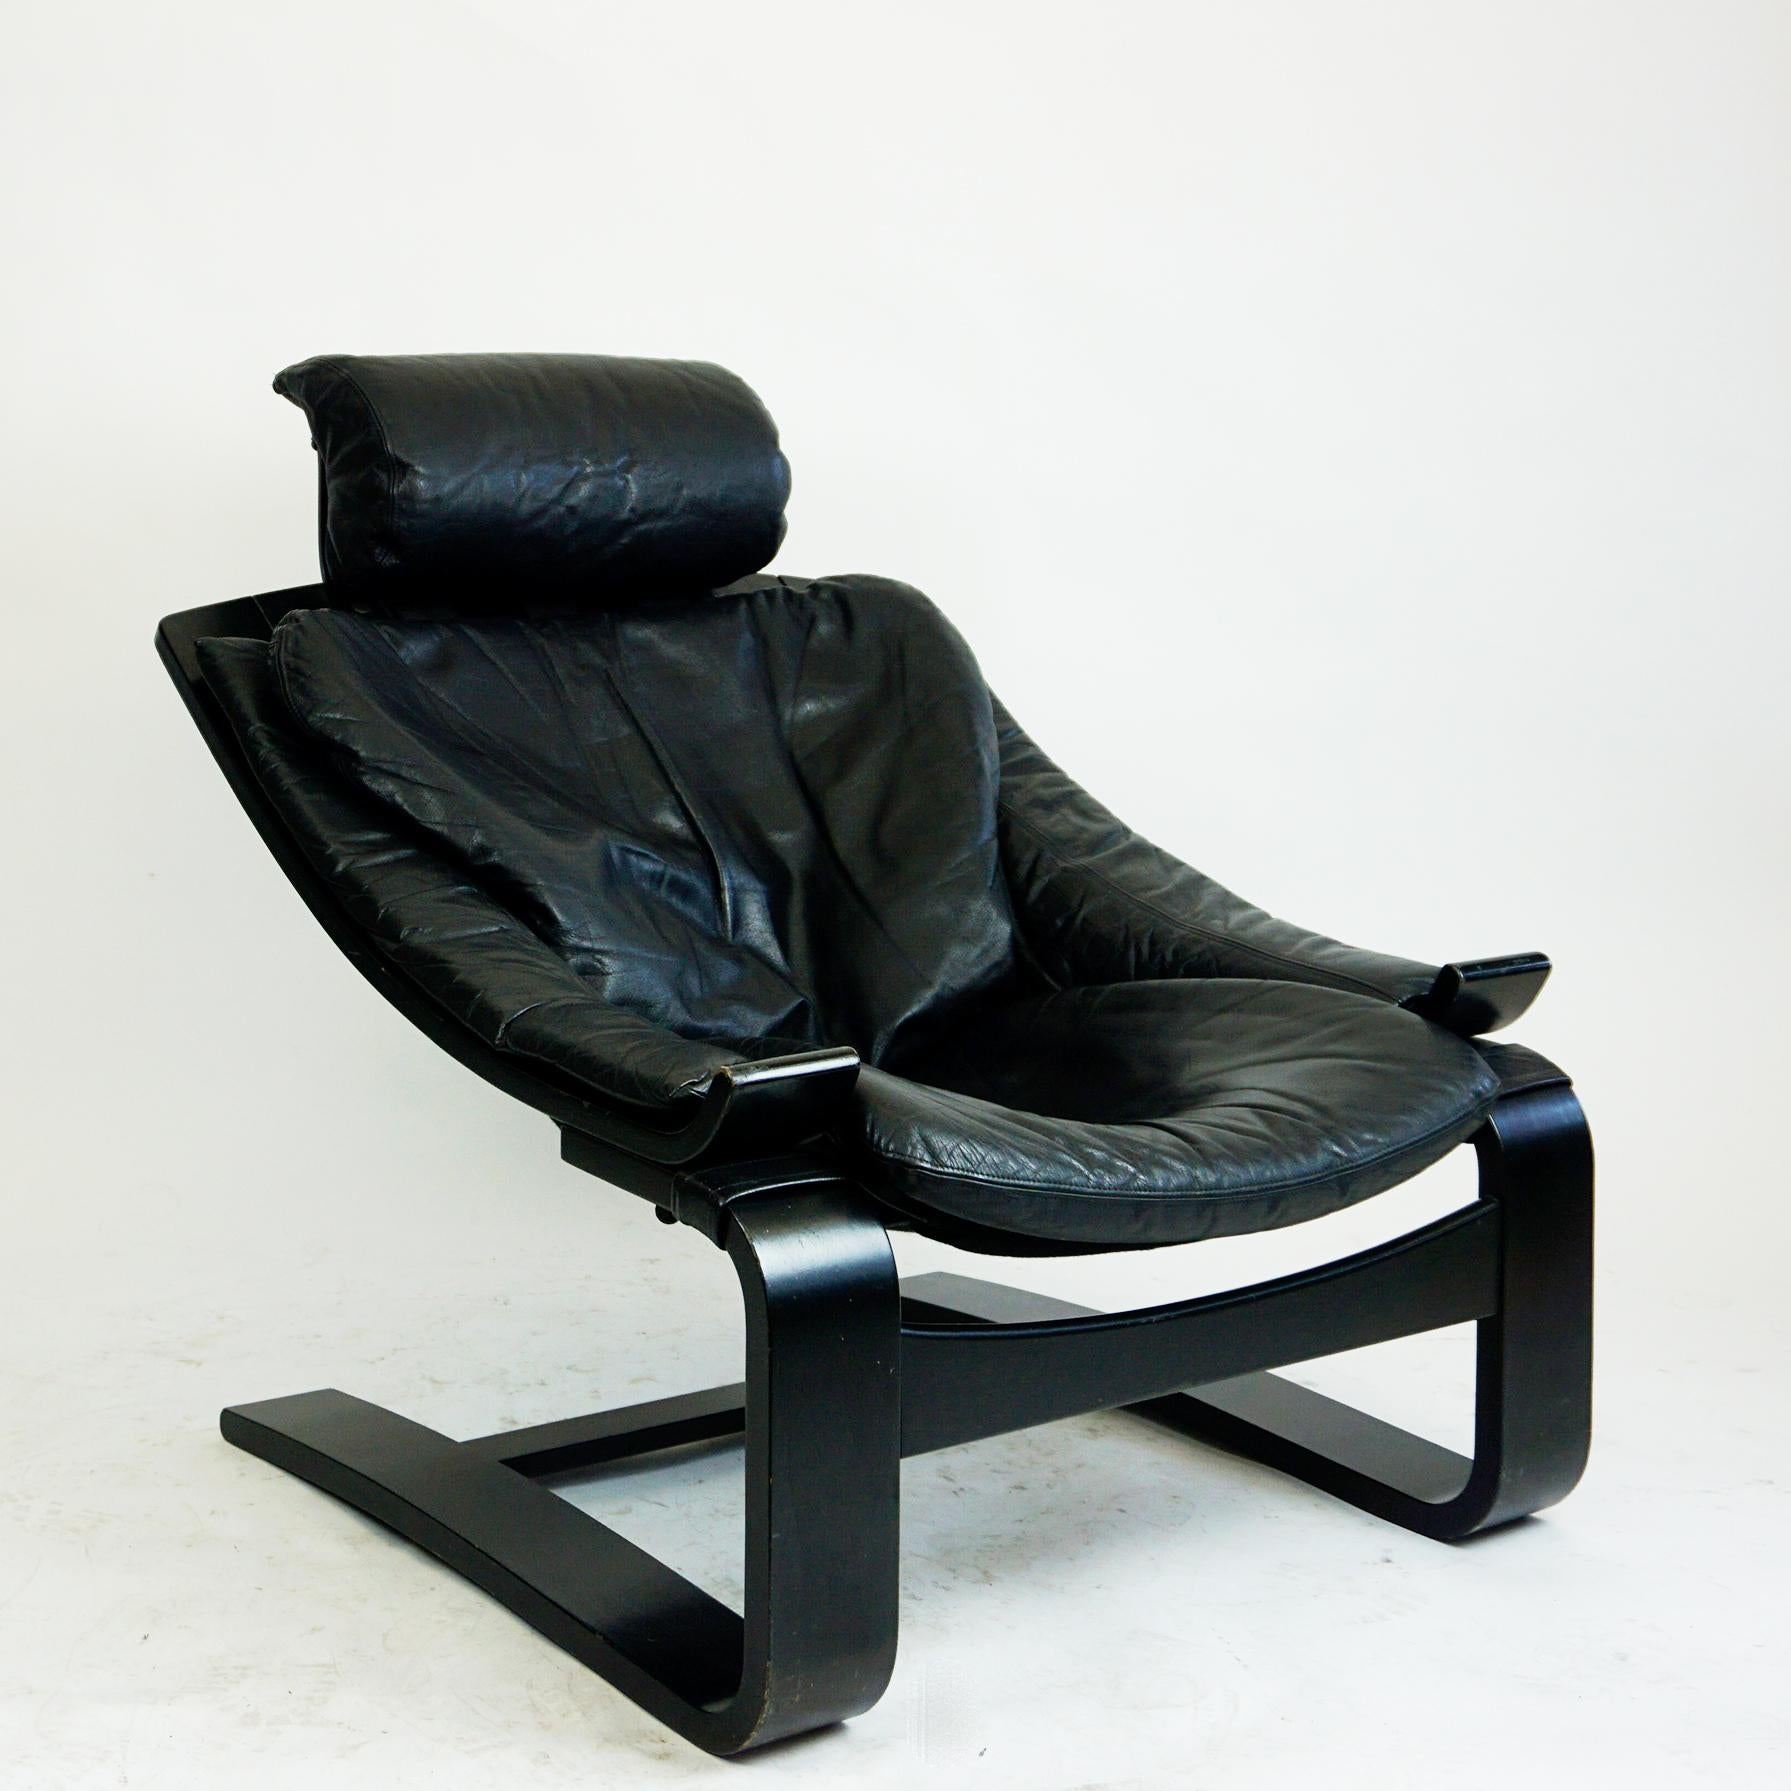 Scandinavian Modern Scandinavian Black Leather Kroken Lounge Chair by Ake Fribytter for Nelo Sweden